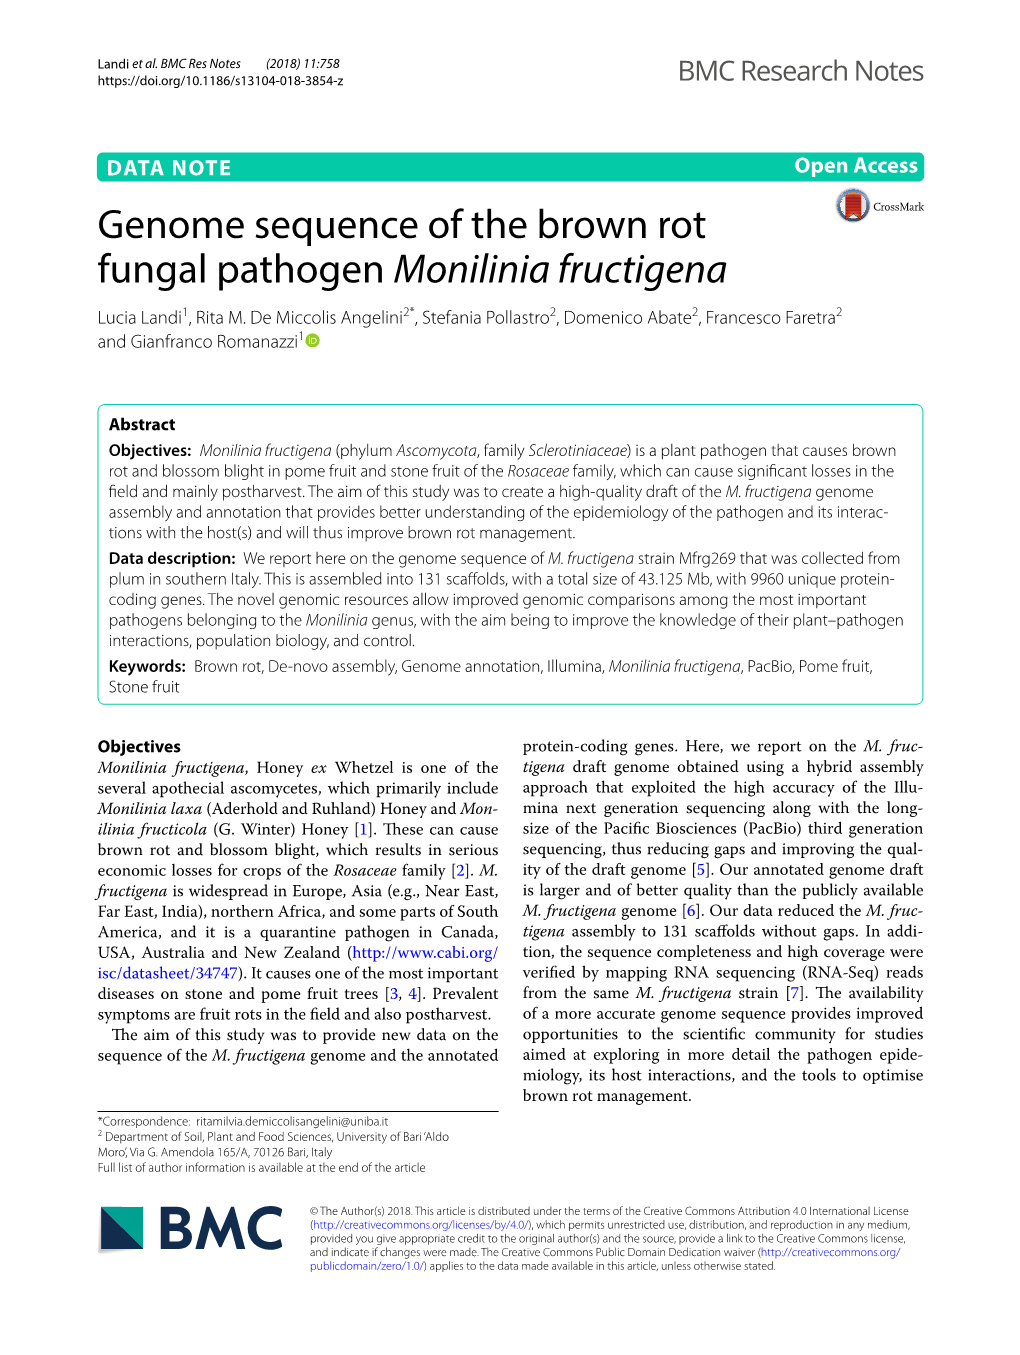 Genome Sequence of the Brown Rot Fungal Pathogen Monilinia Fructigena Lucia Landi1, Rita M